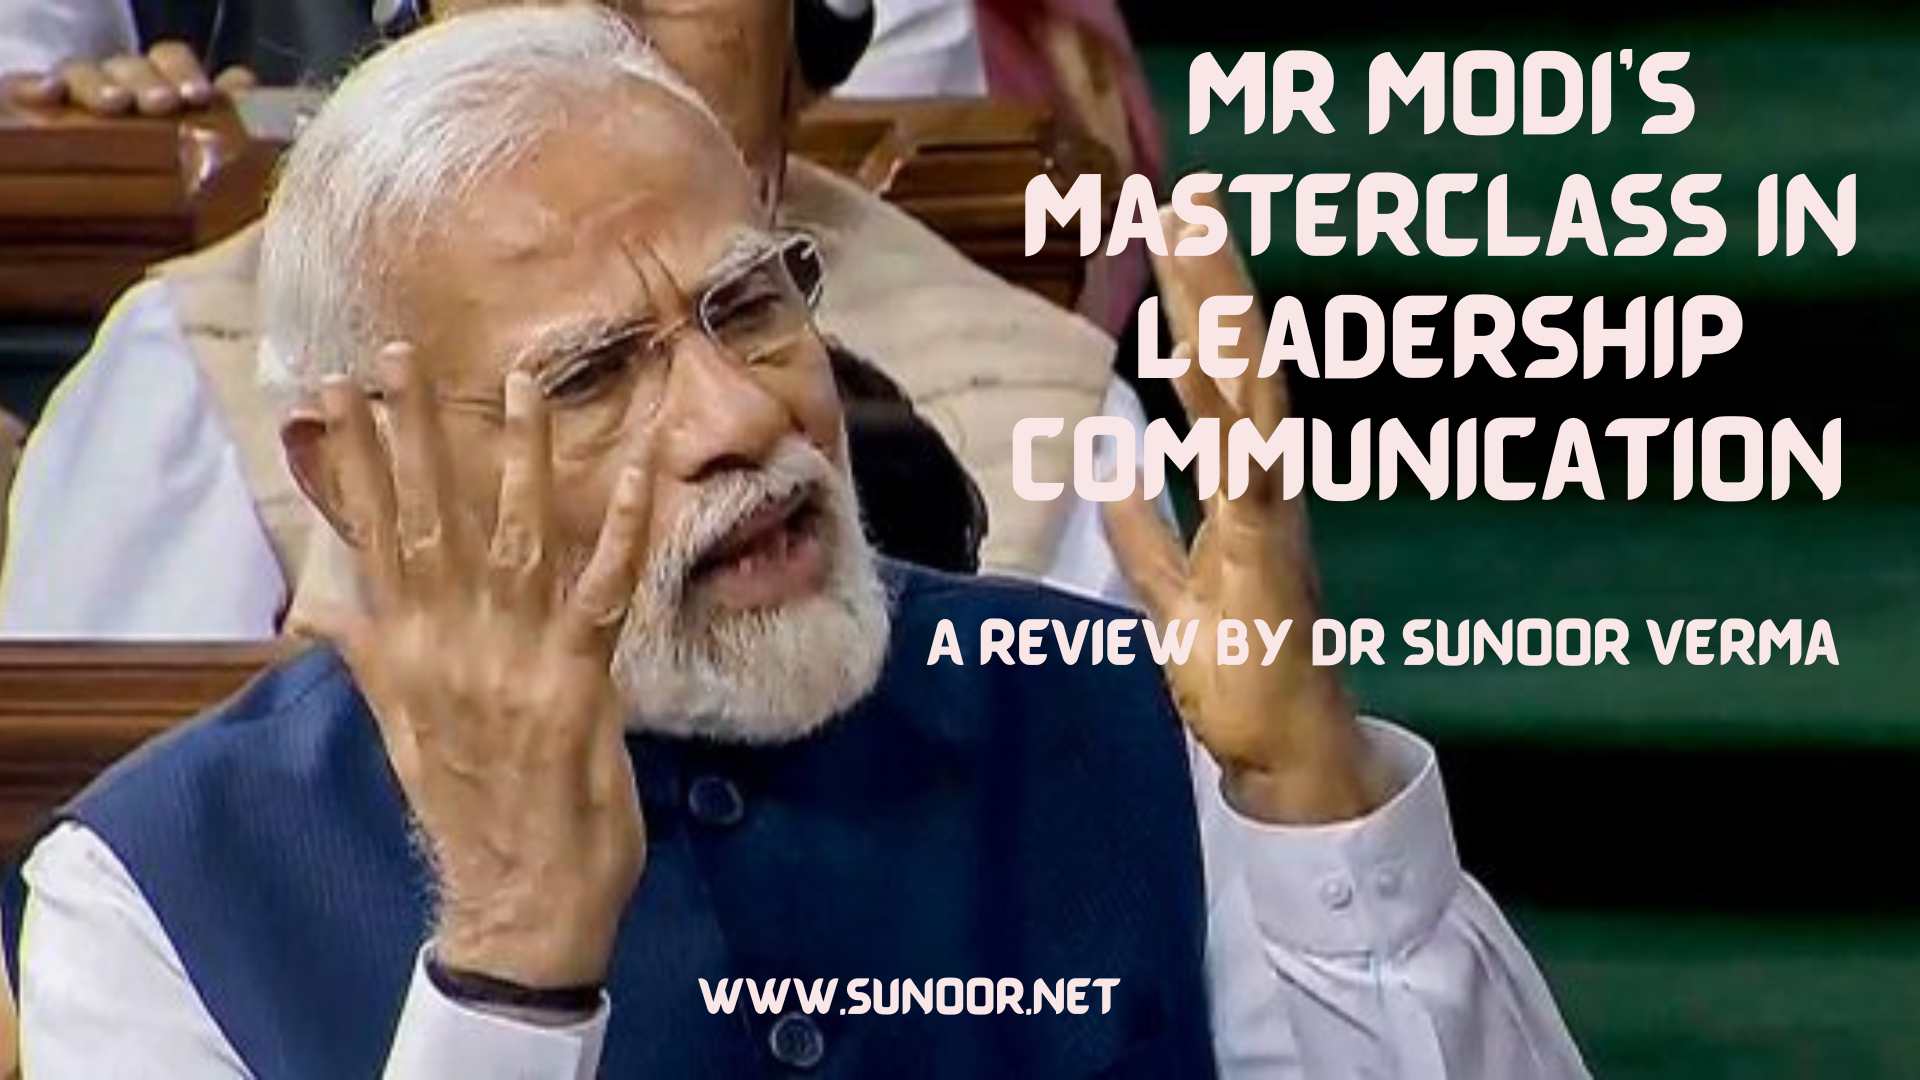 Prime Minister Modi delivers a masterclass in leadership communication